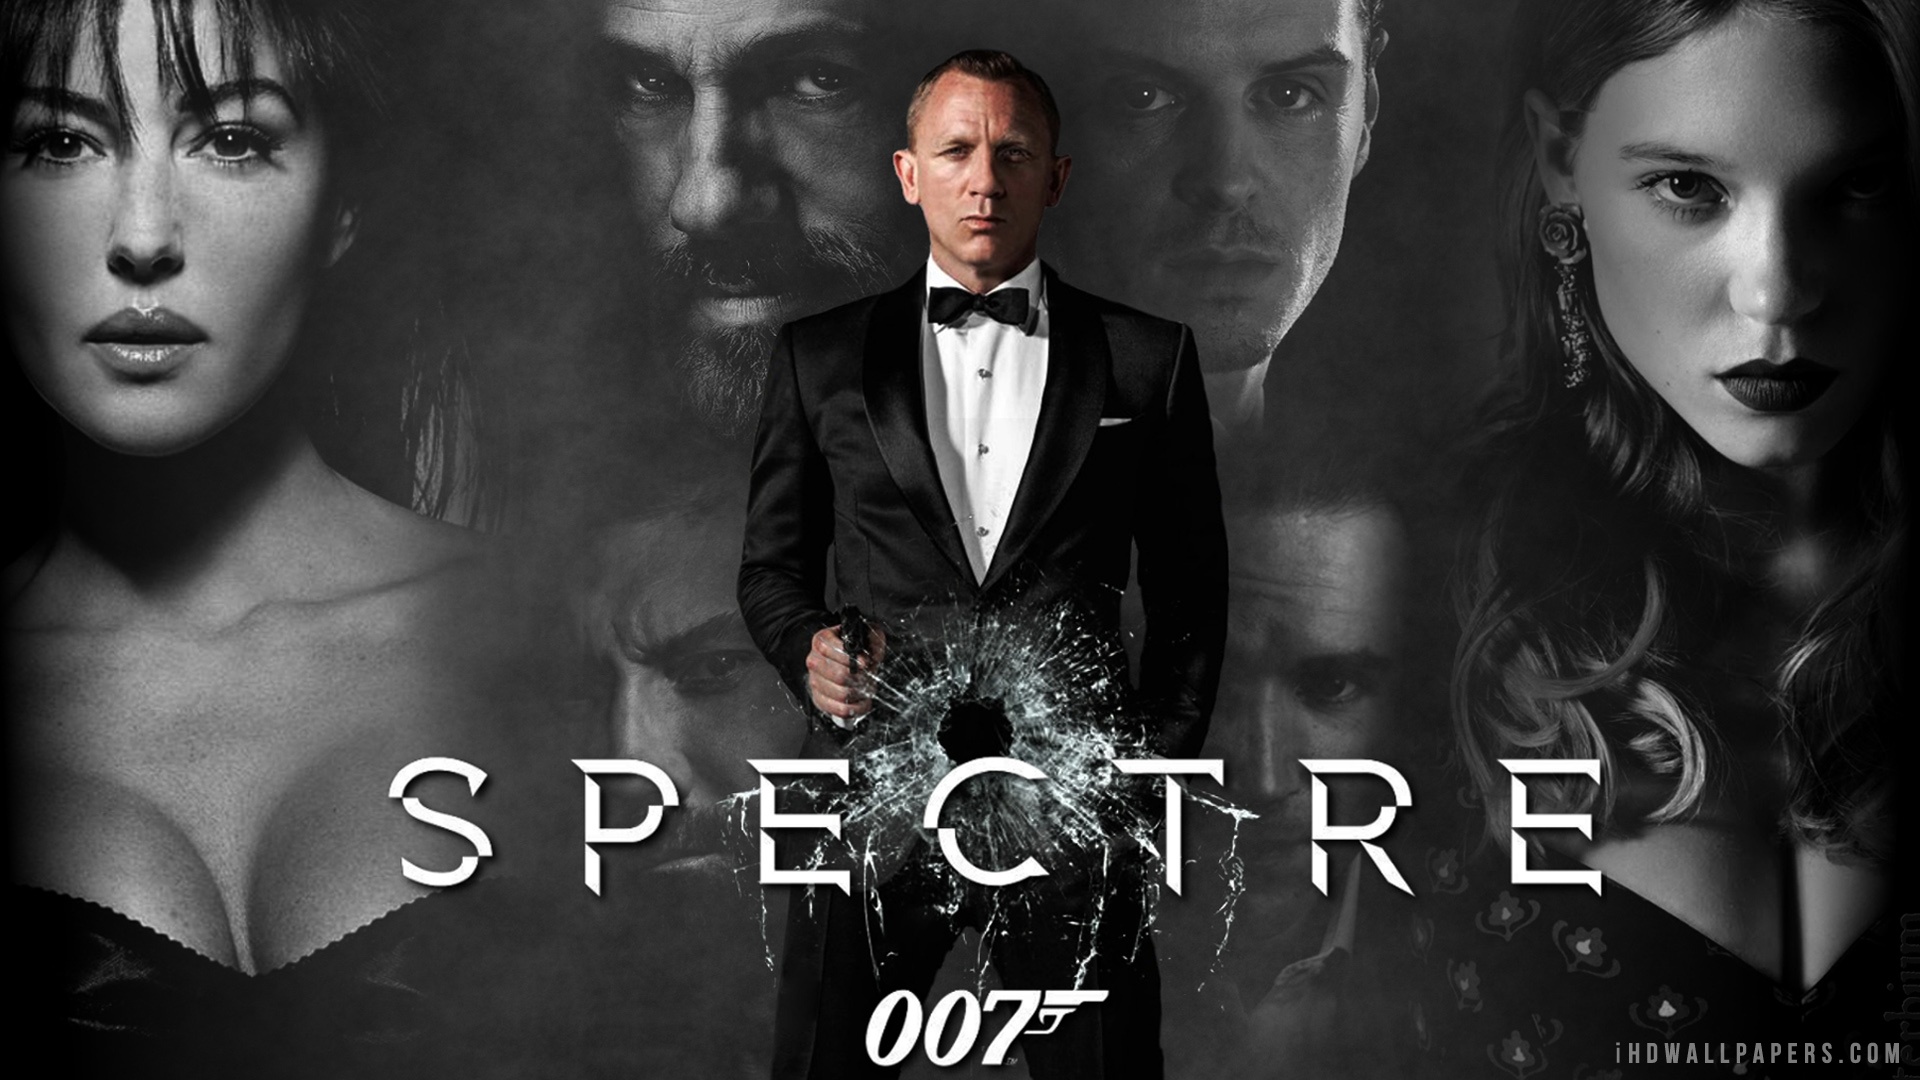 007 spectre movie 2015